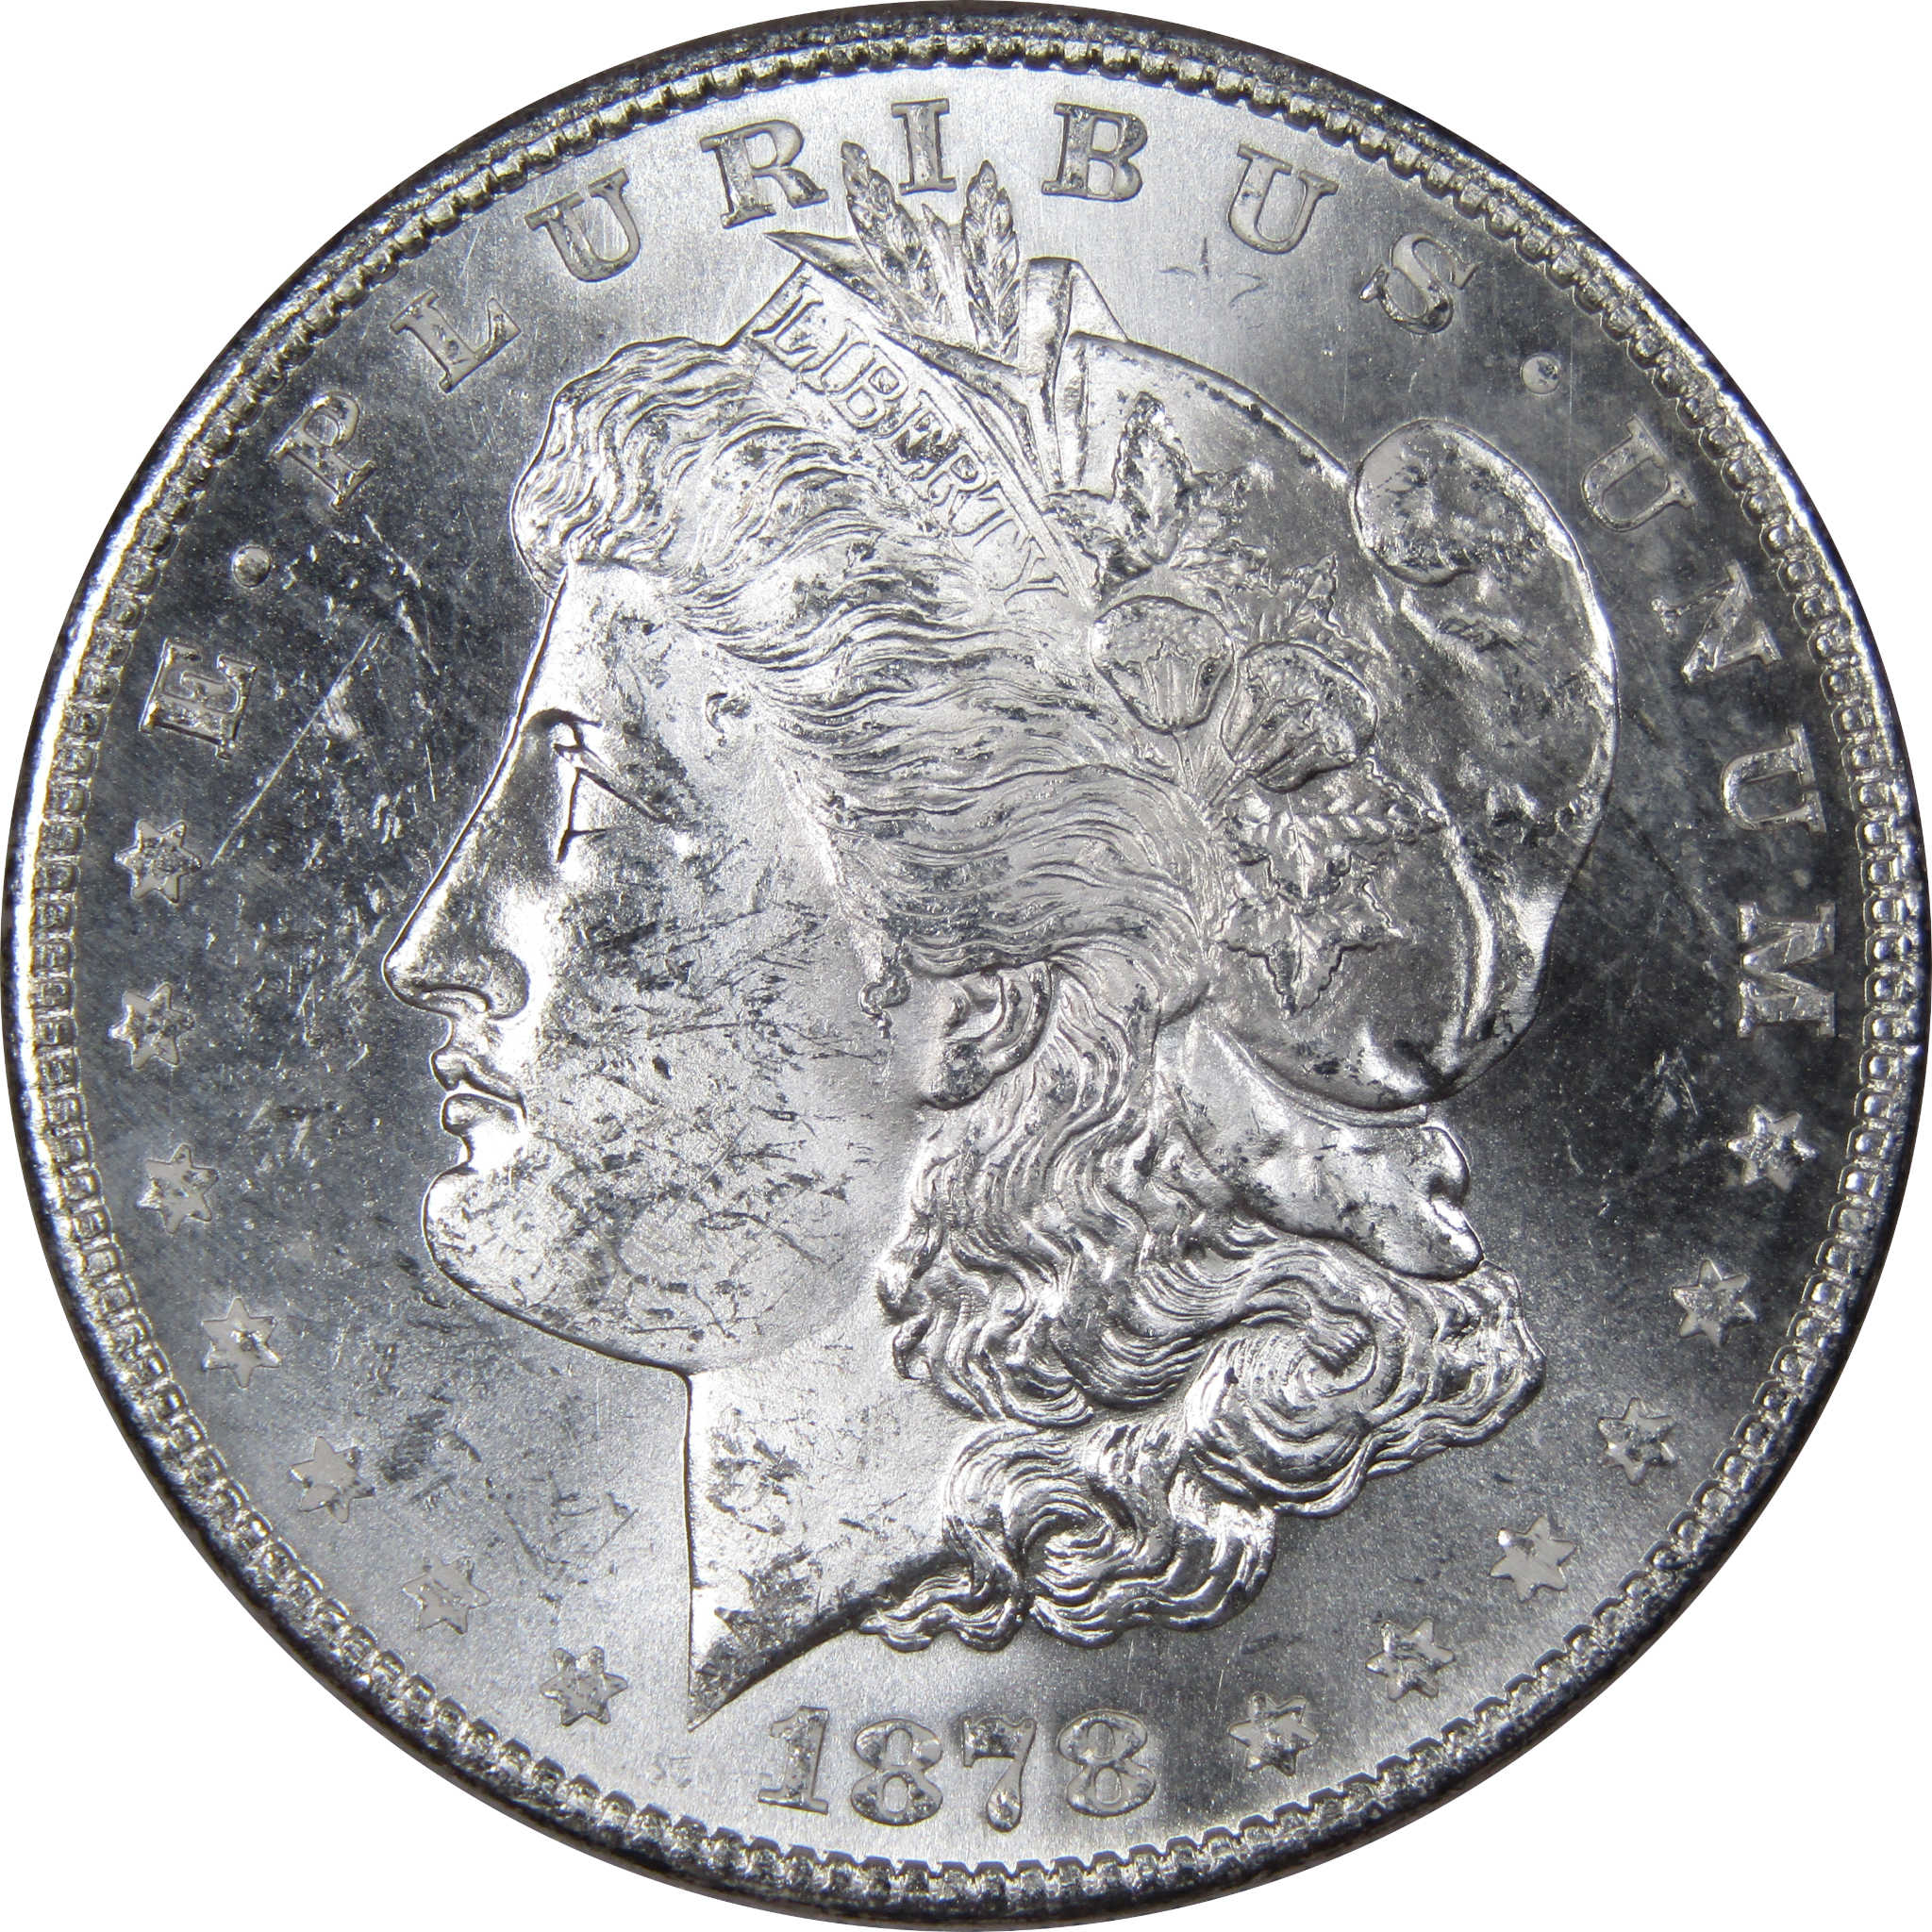 1878 S Morgan Dollar BU Uncirculated Mint State 90% Silver SKU:IPC8878 - Morgan coin - Morgan silver dollar - Morgan silver dollar for sale - Profile Coins &amp; Collectibles